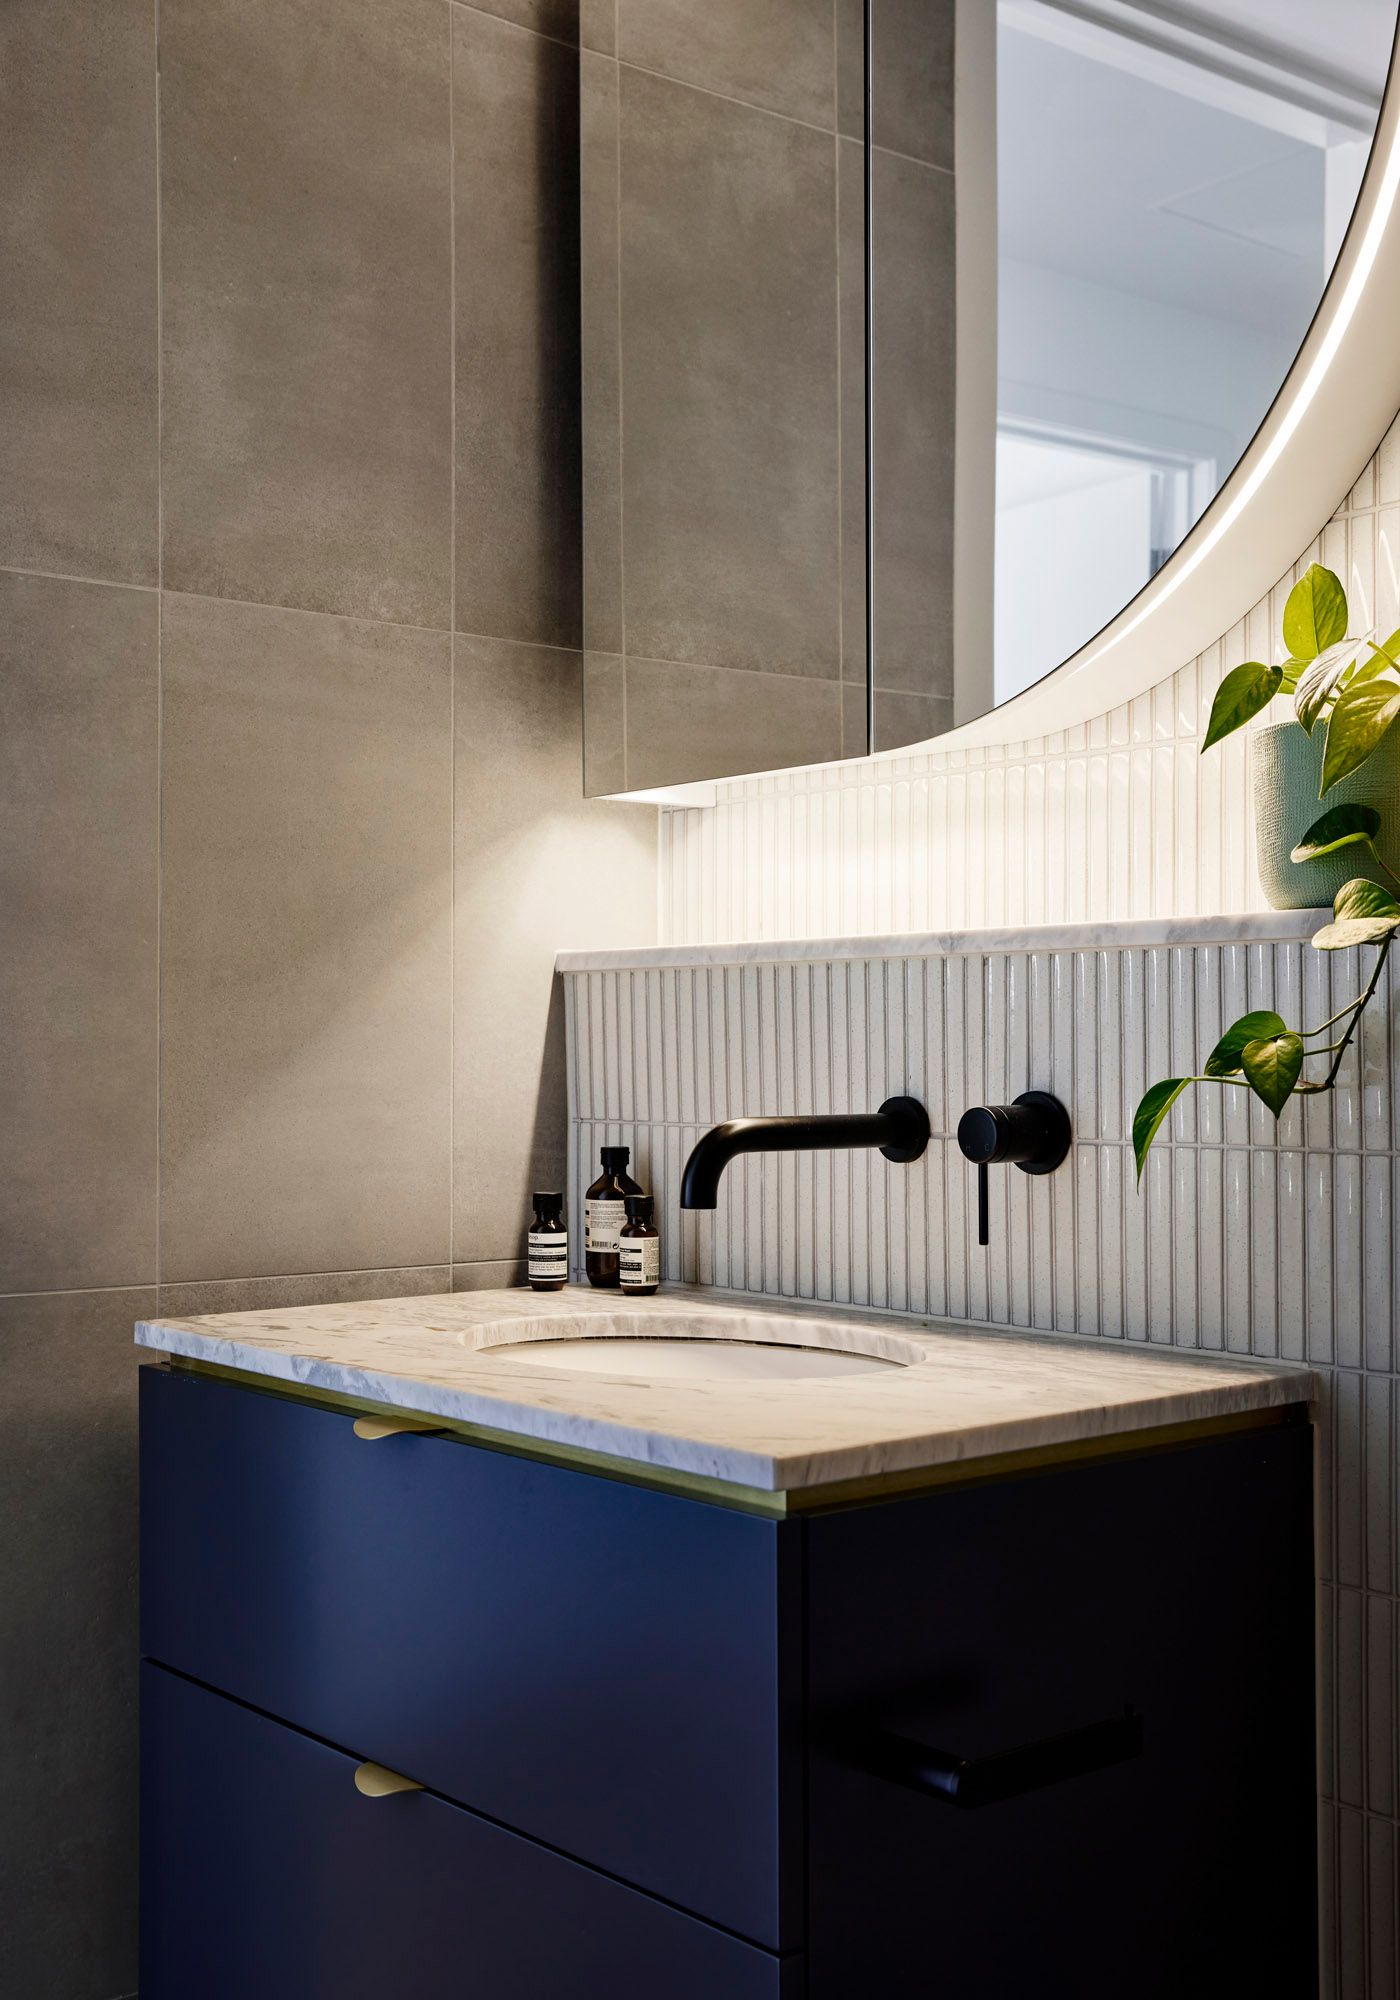 Slate House by Austin Maynard Architects. Detailing of ensuite bathroom vanity